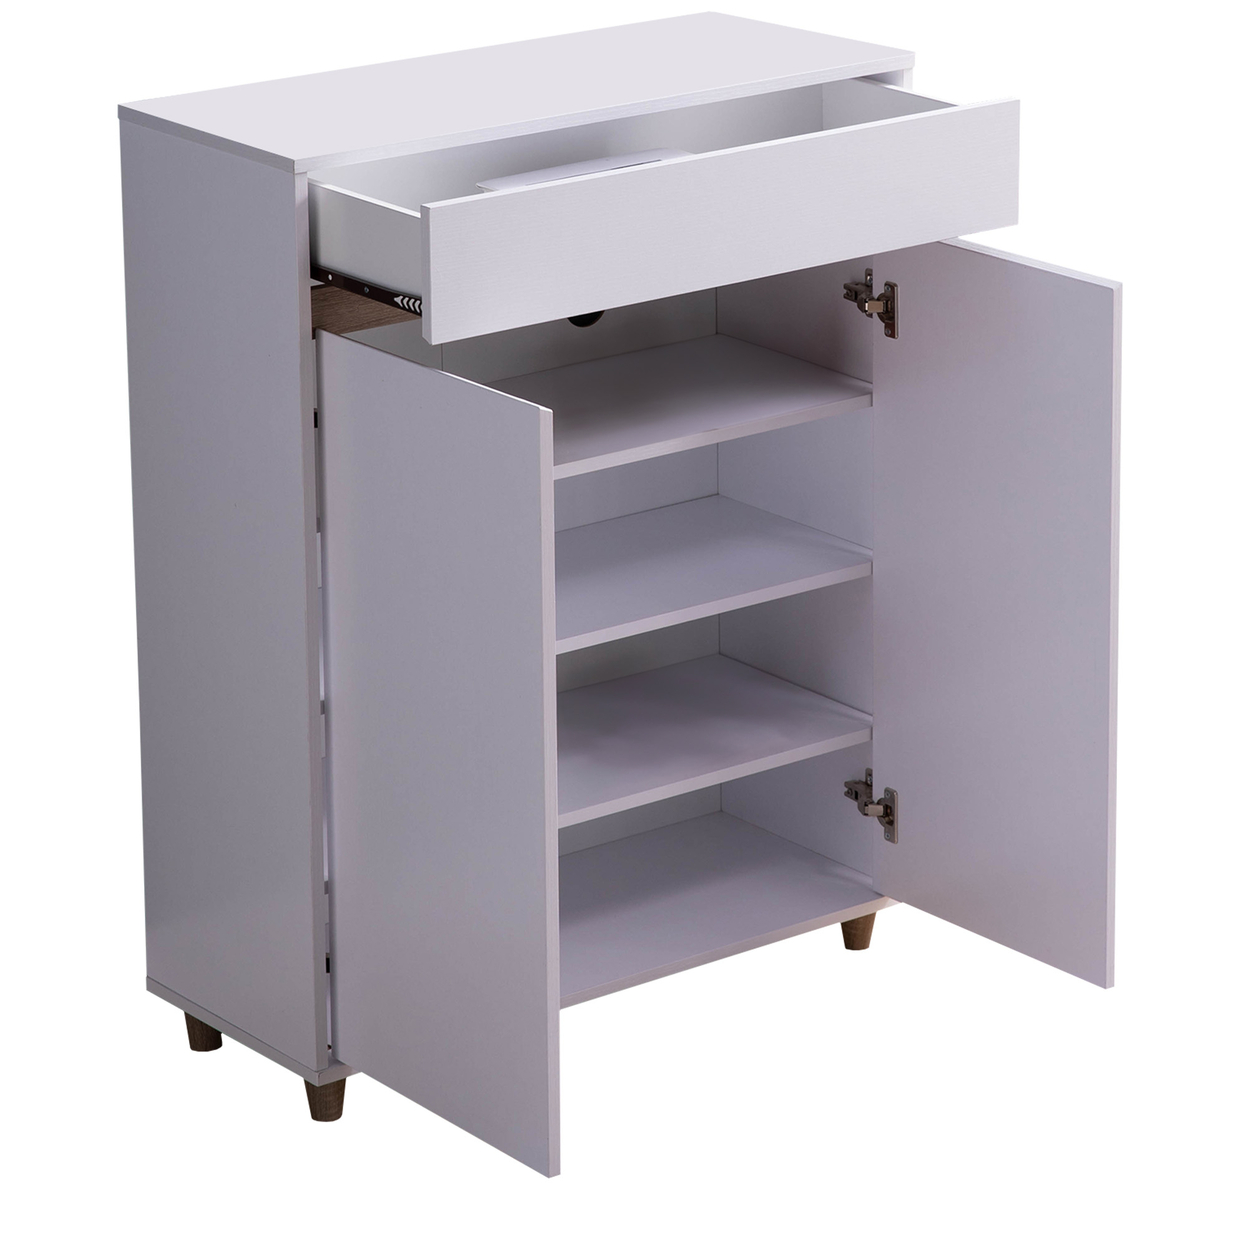 41 Inch Double Door Shoe Cabinet With 4 Shelves, Integrated Handle, White- Saltoro Sherpi